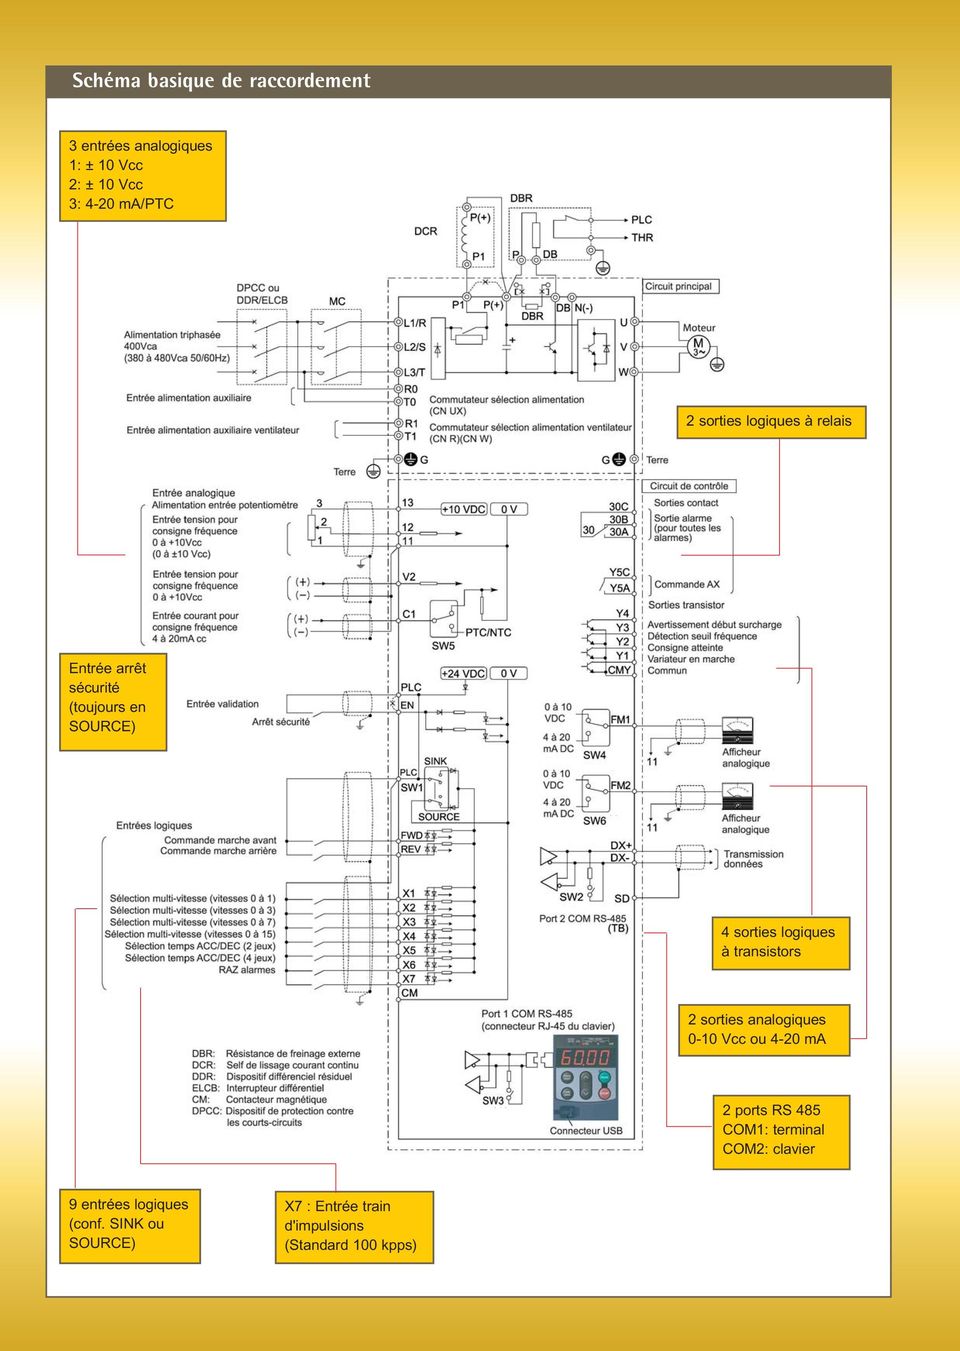 transistors 2 sorties analogiques 0-10 Vcc ou 4-20 ma 2 ports RS 485 COM1: terminal COM2: